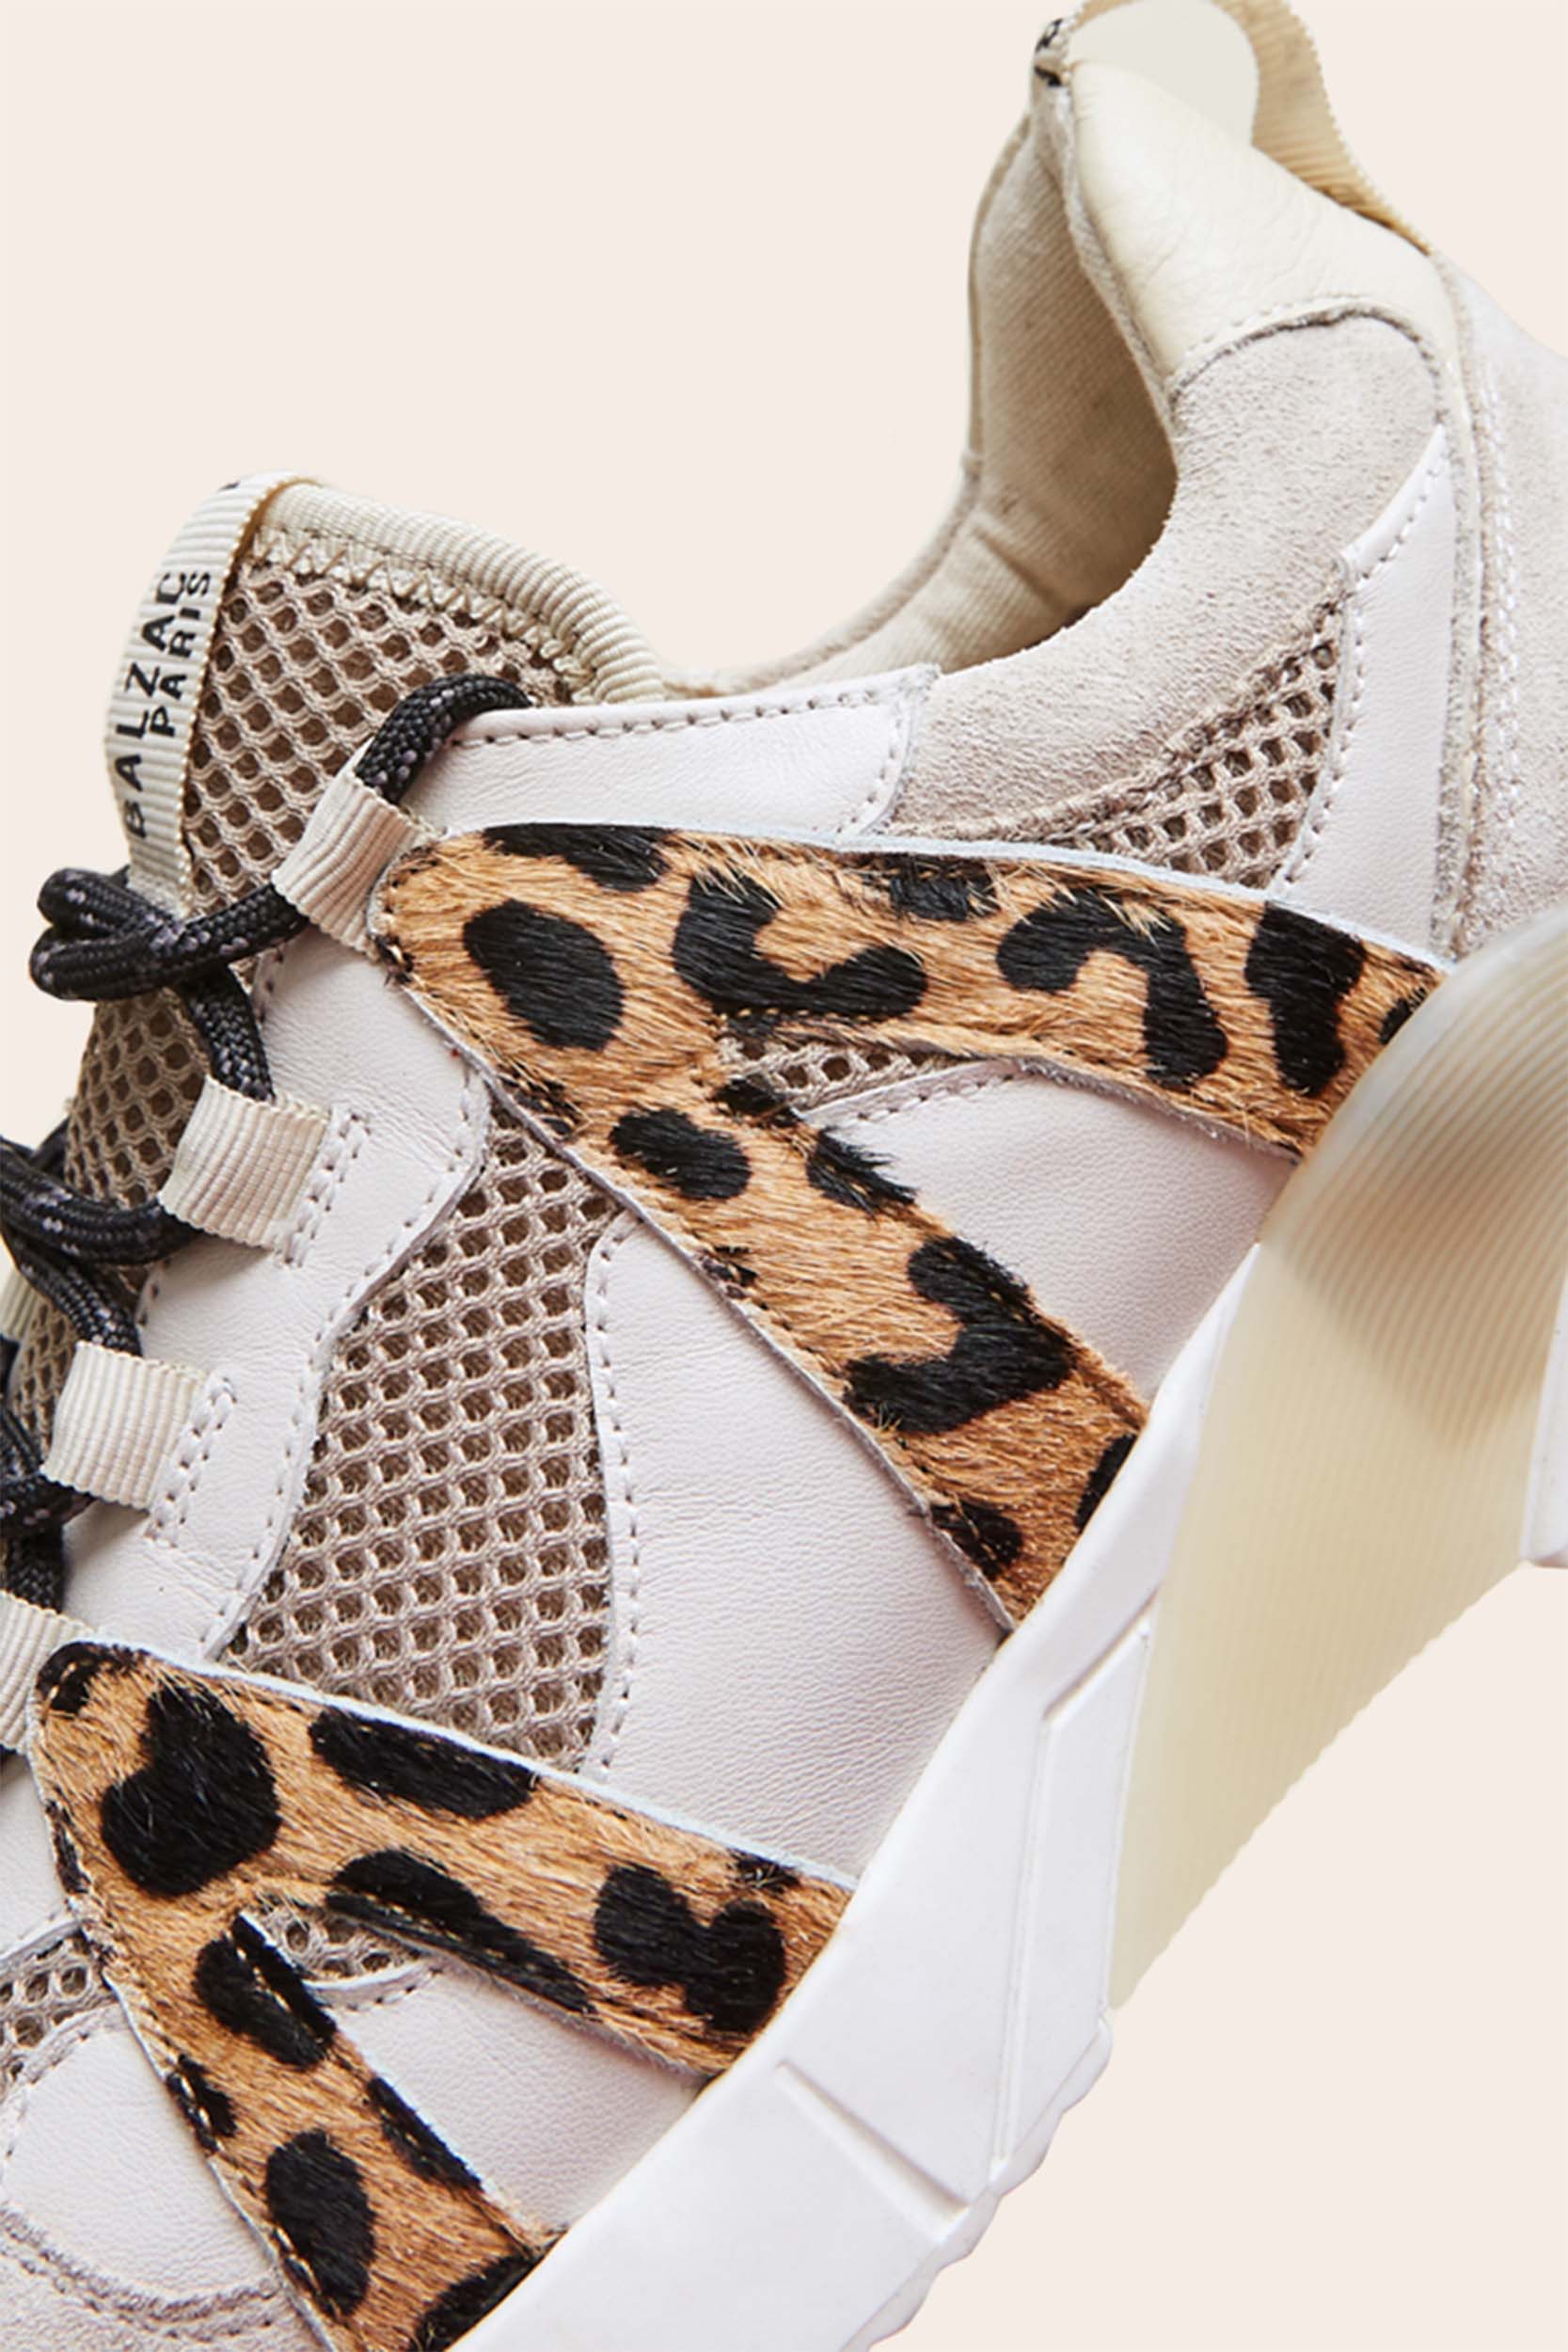 Sand and cheetah Astor sneakers